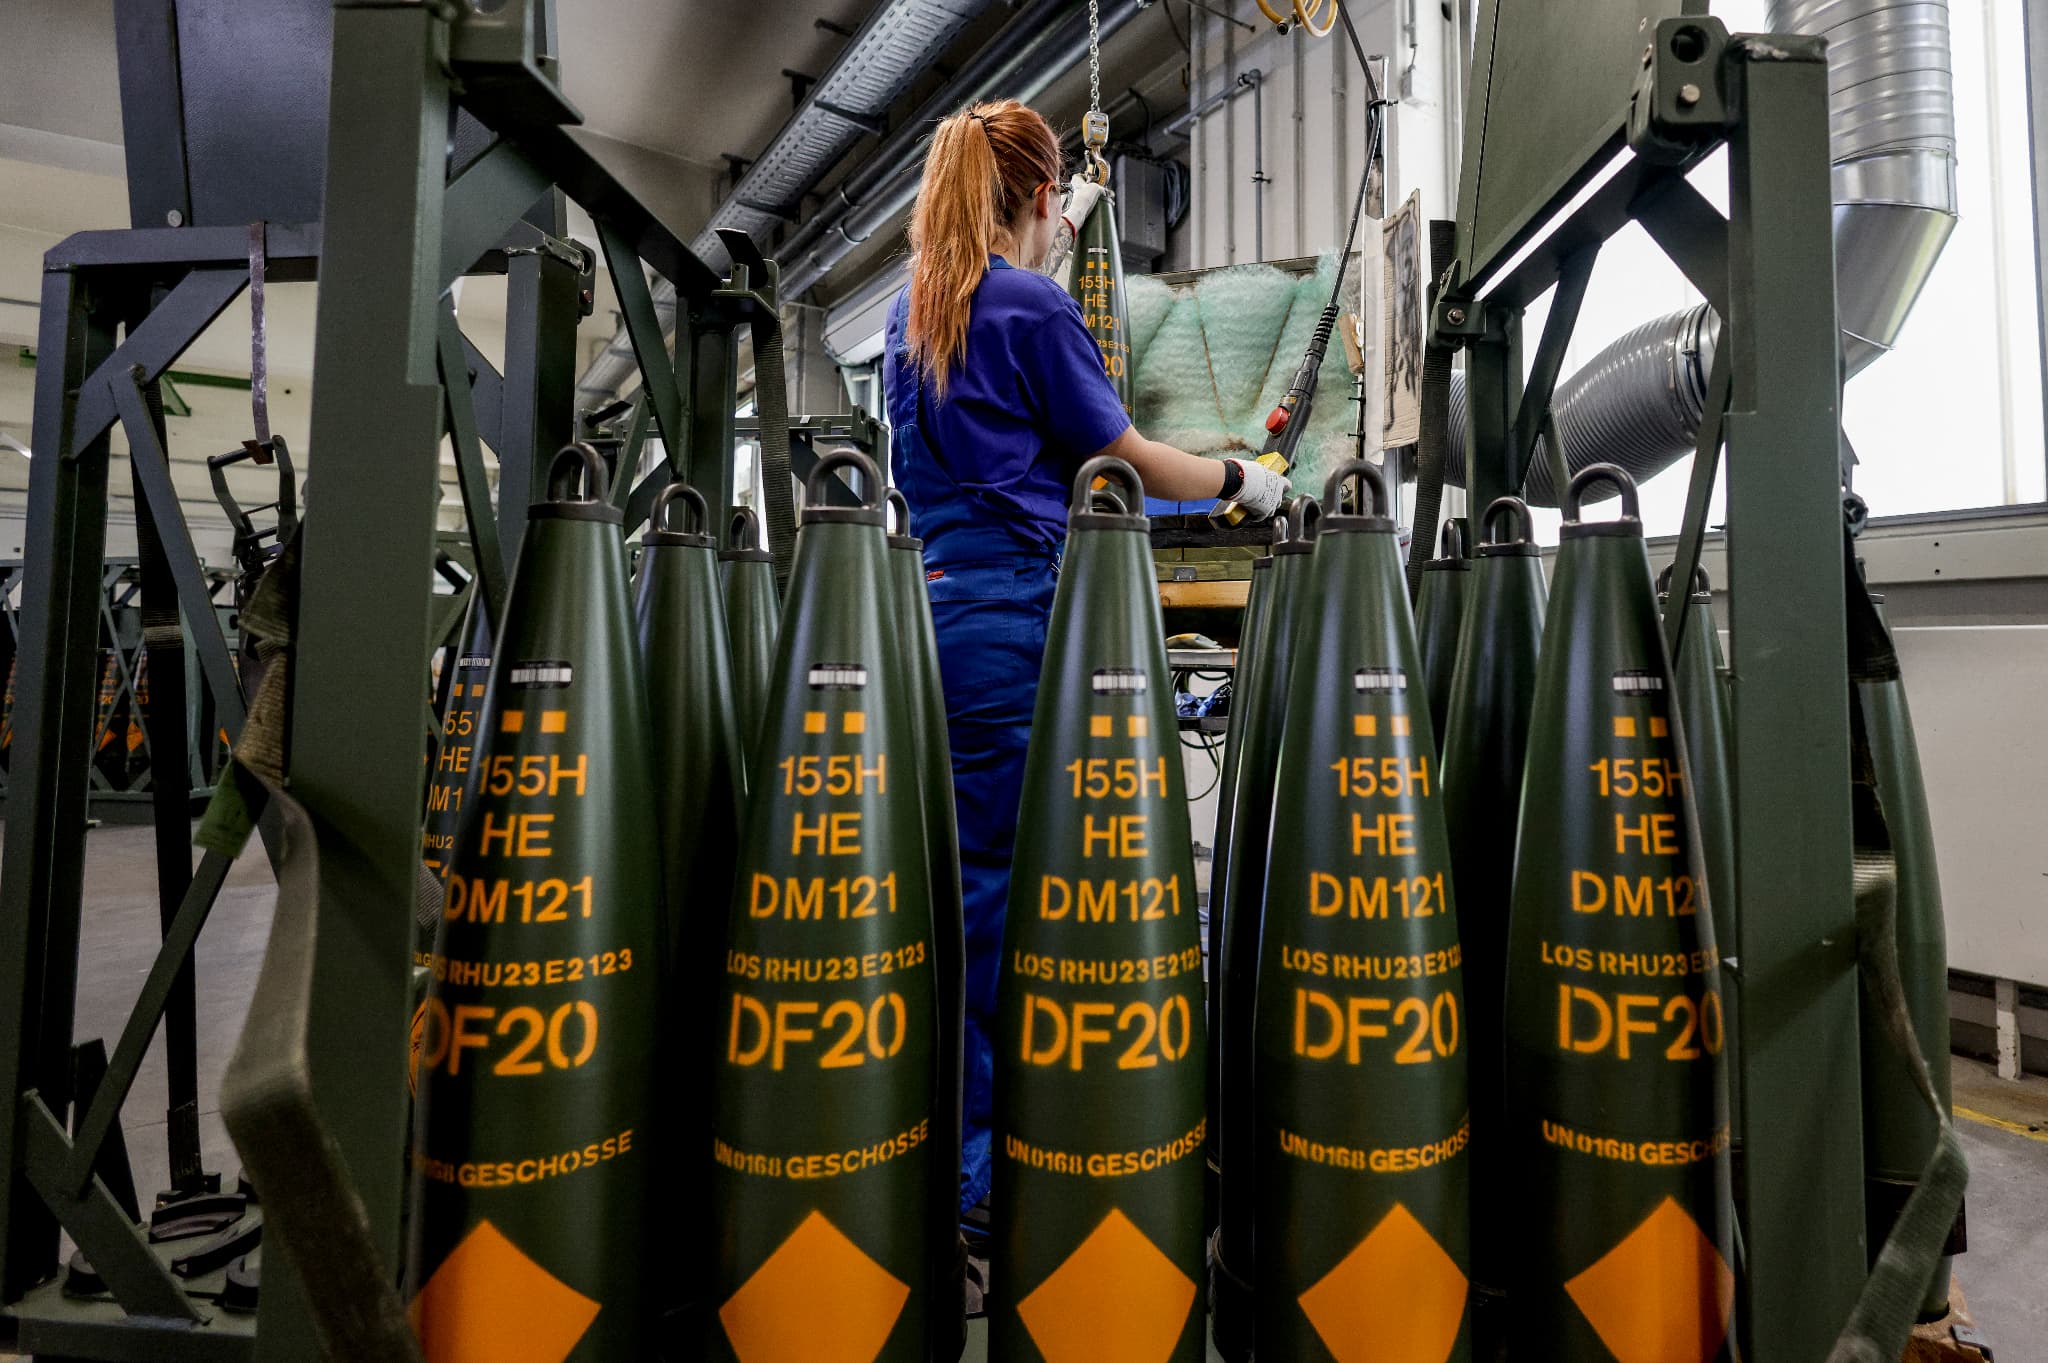 l'allemand rheinmetall va fabriquer des munitions en ukraine